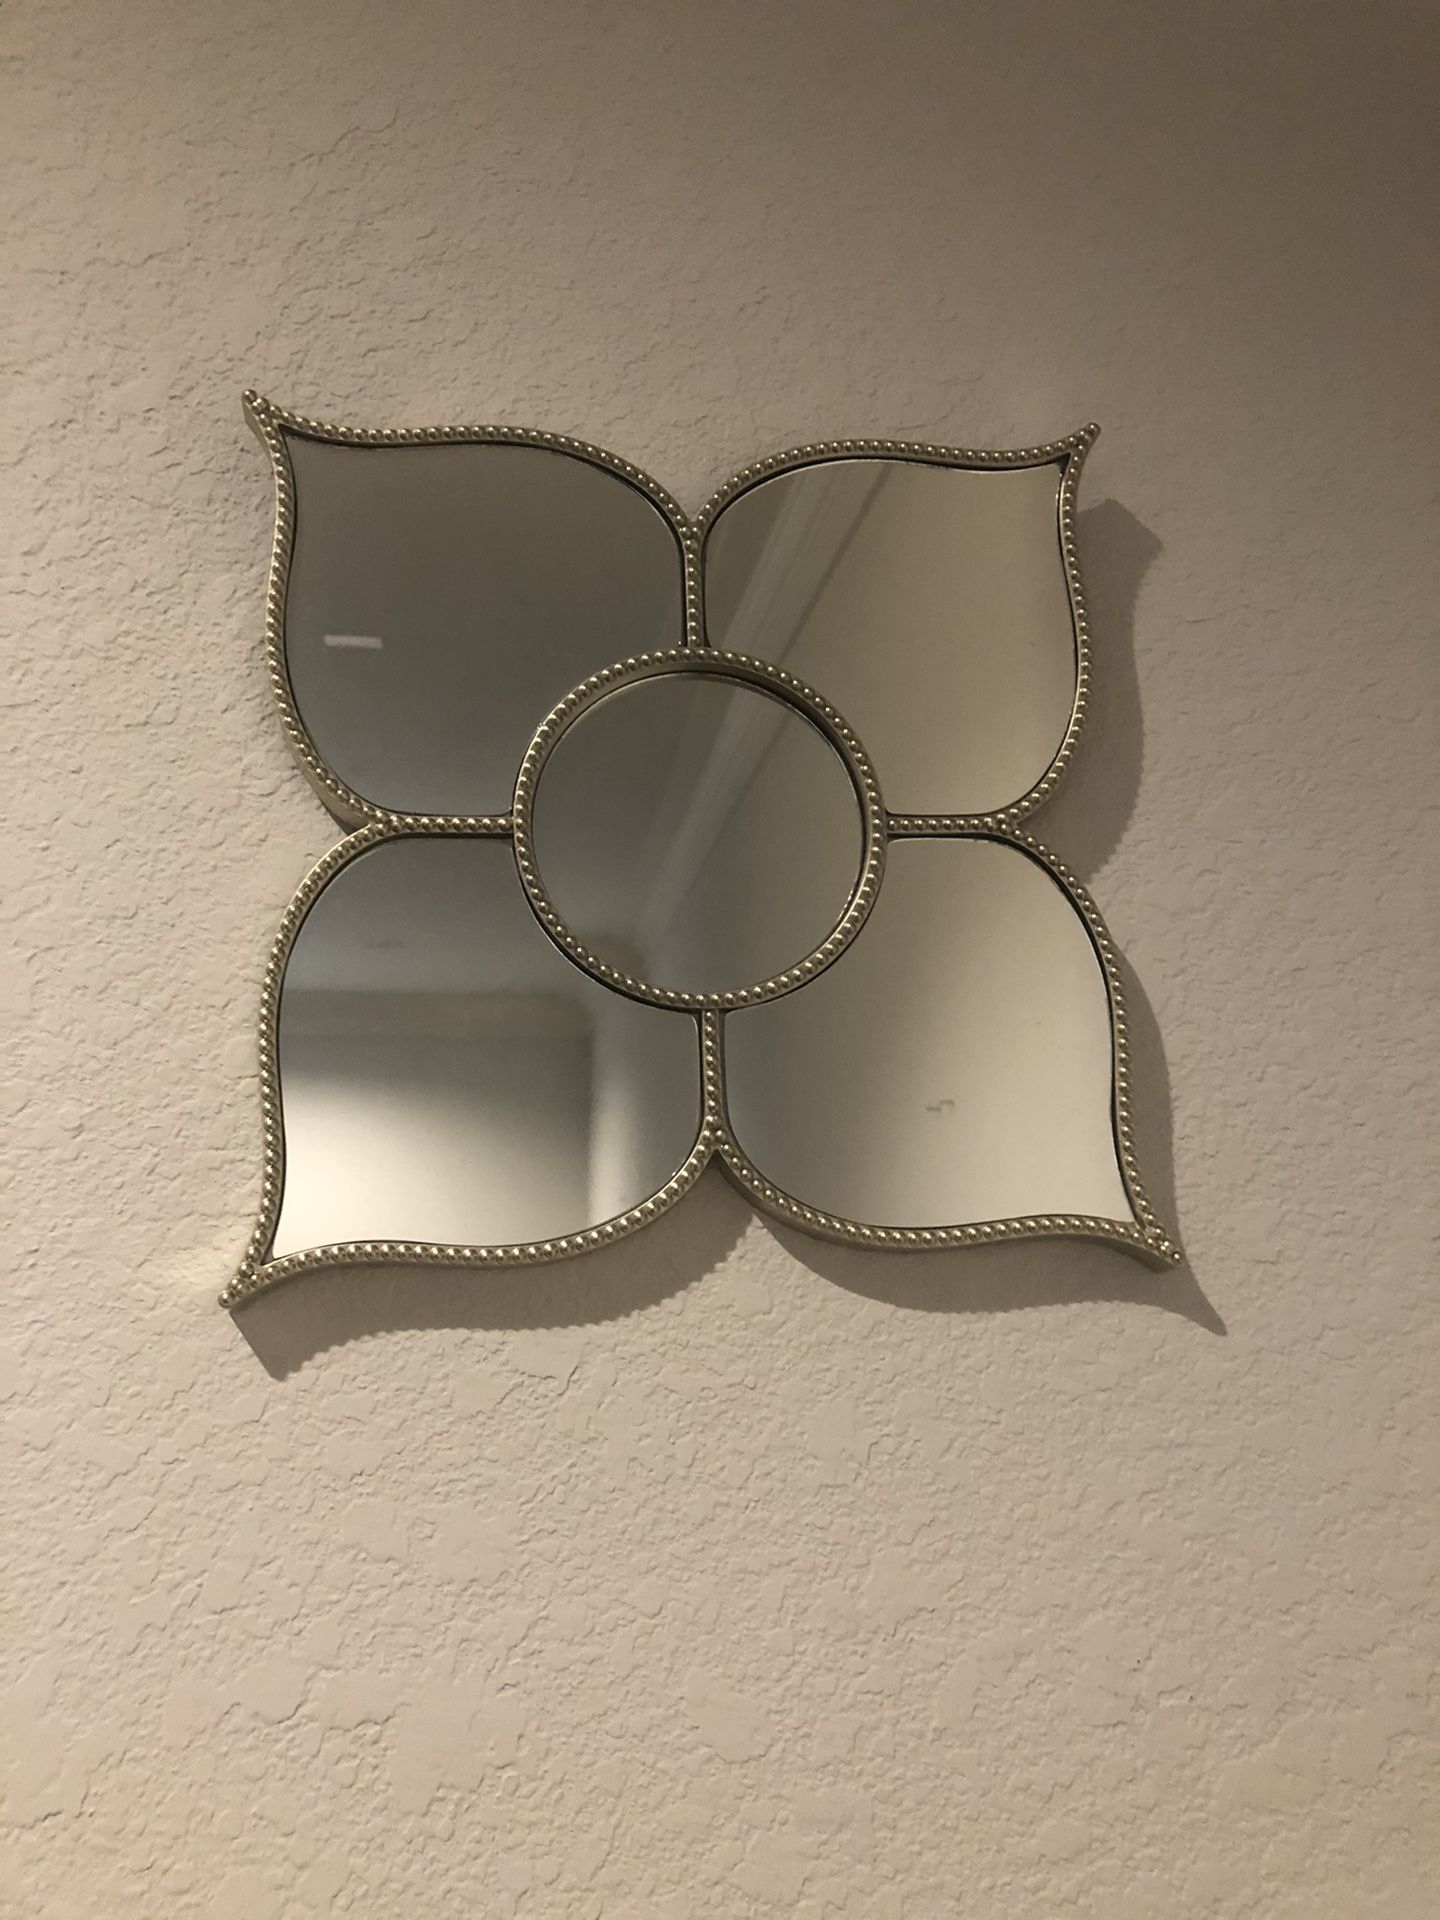 Lotus leaf wall decoration